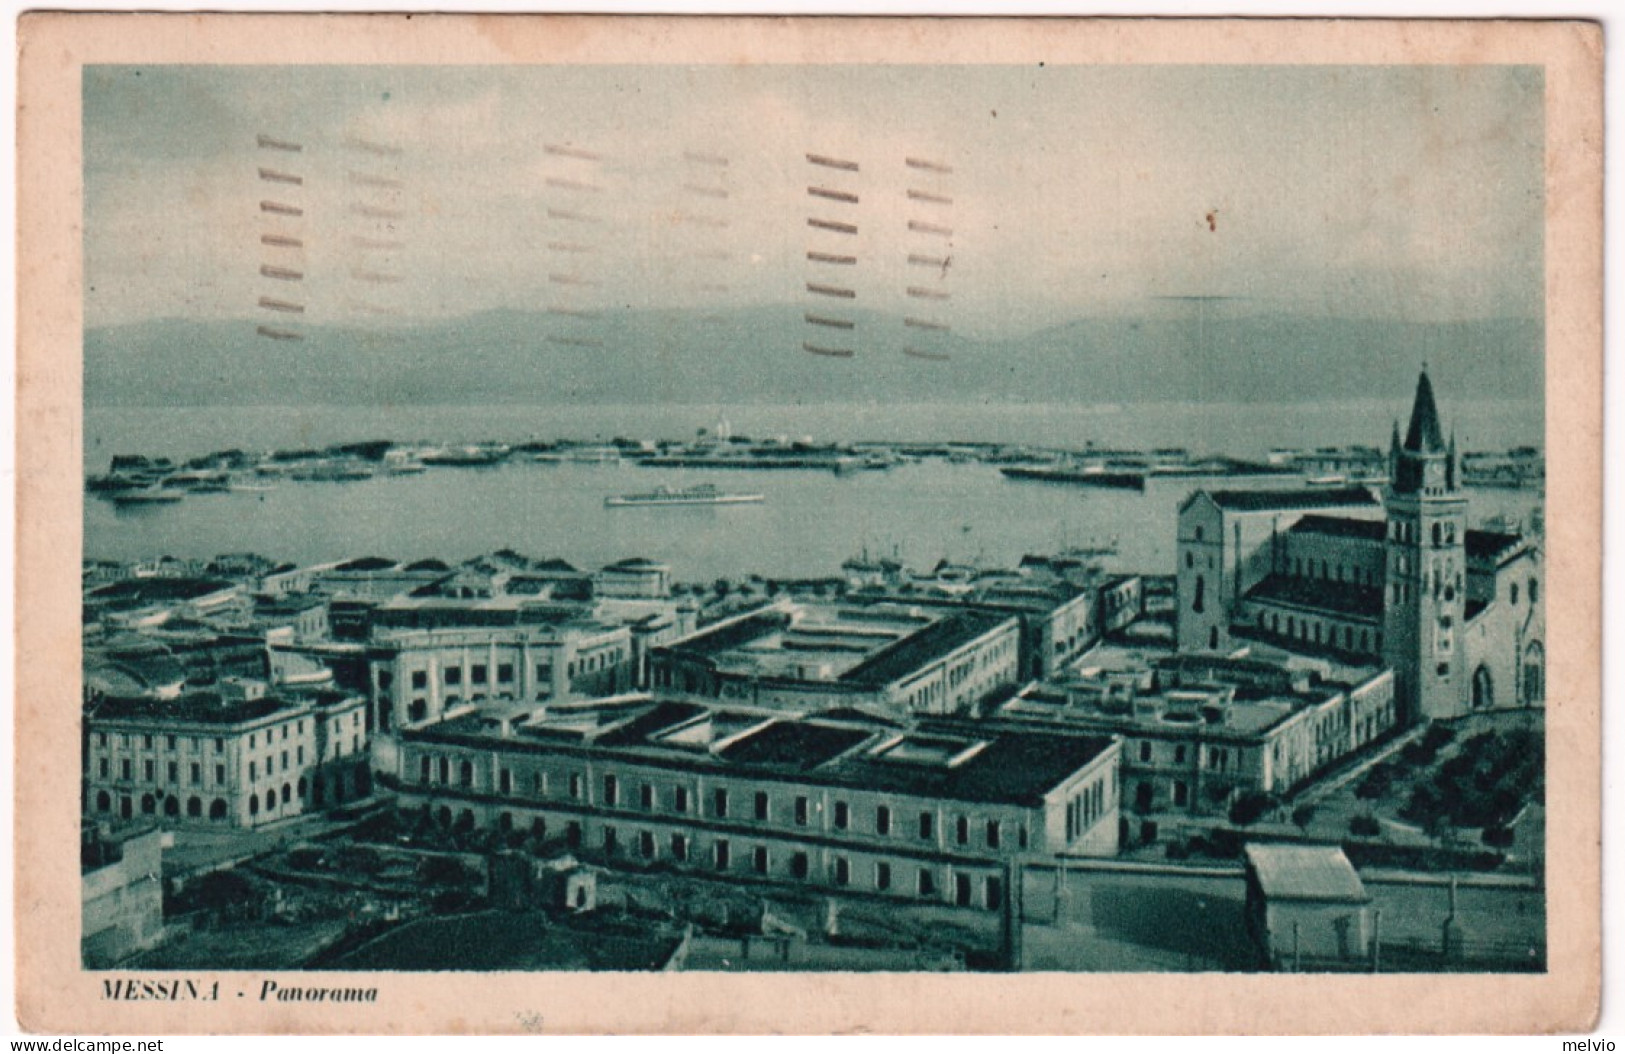 1935-Messina Panorama Cartolina Affrancata 10c. Imperiale + Somalia 10c. (frode  - Marsala